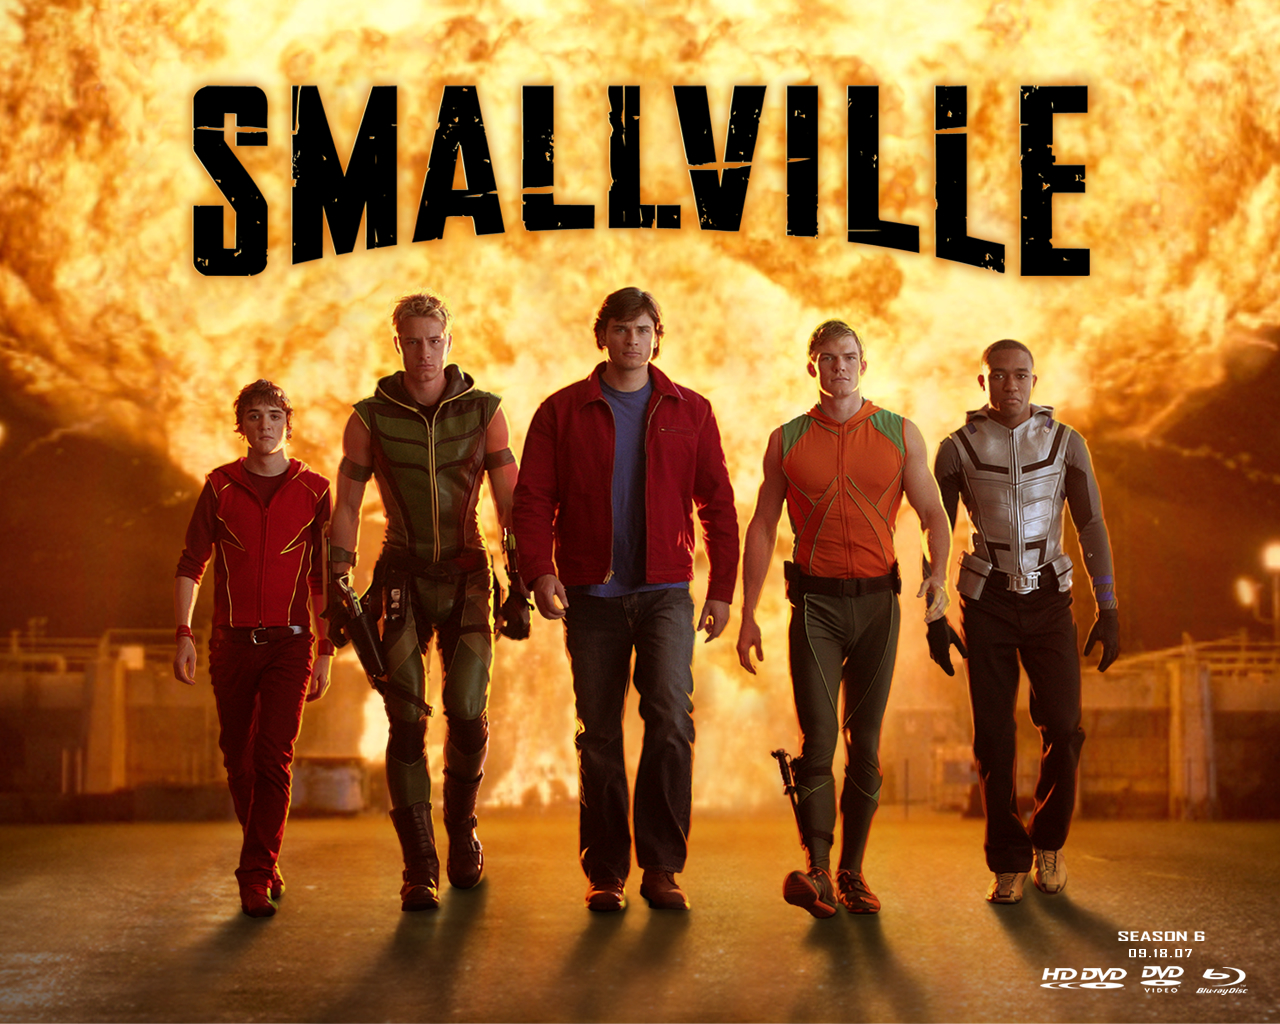 Smallville Backgrounds, Compatible - PC, Mobile, Gadgets| 1280x1024 px